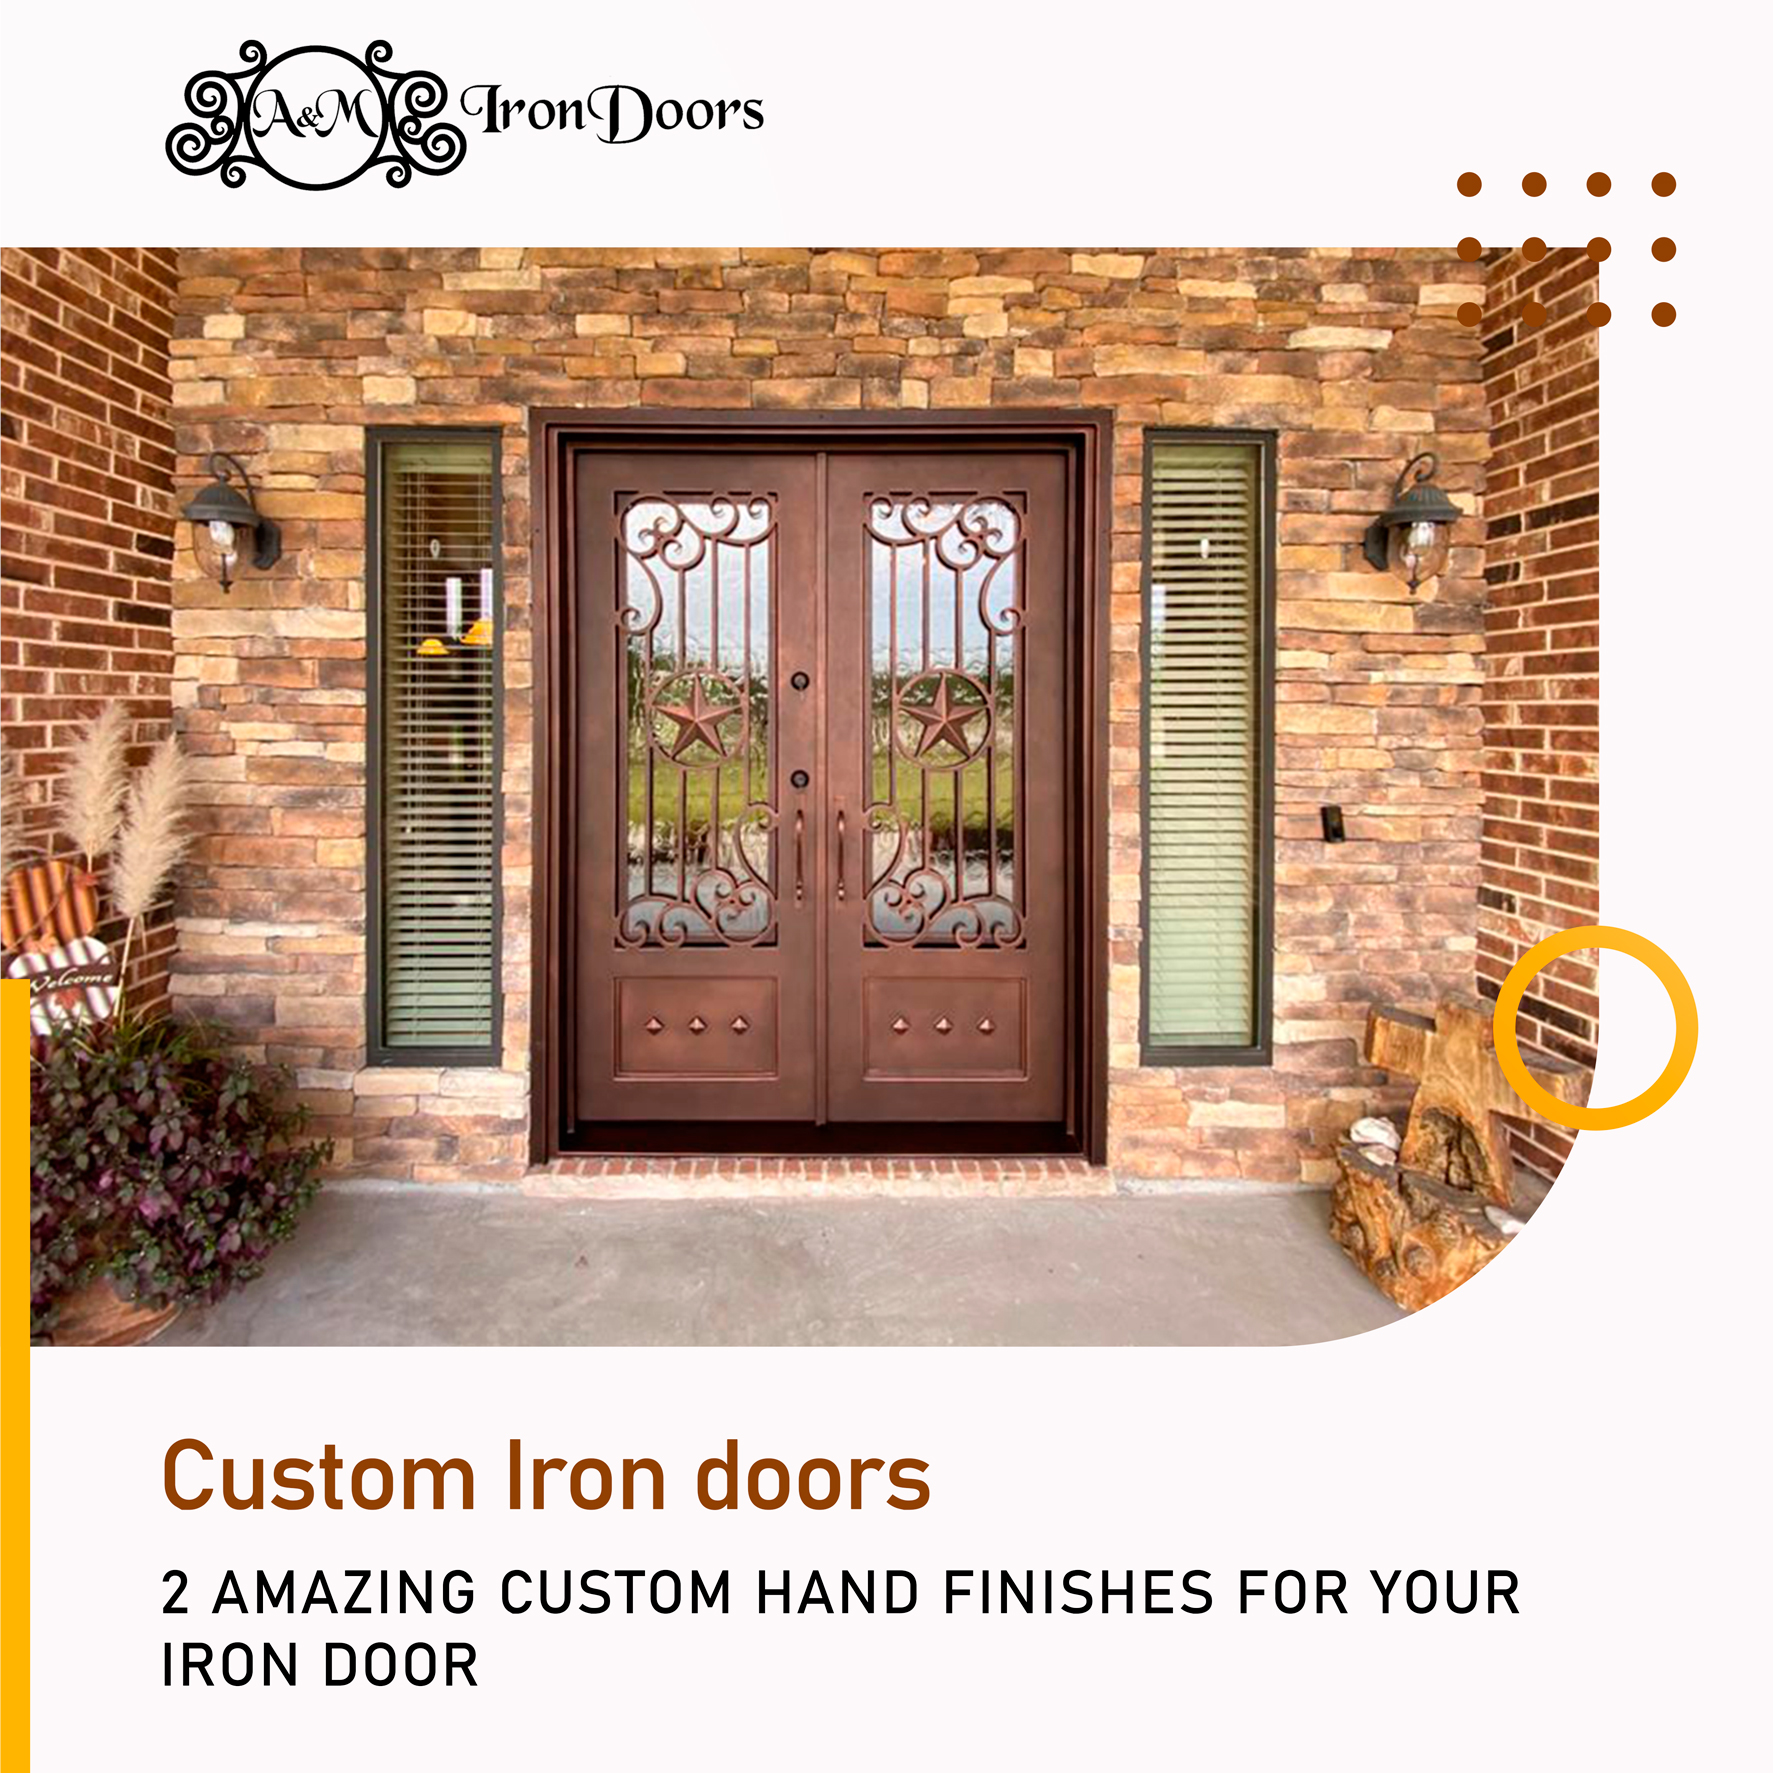 03 Custom Iron doors